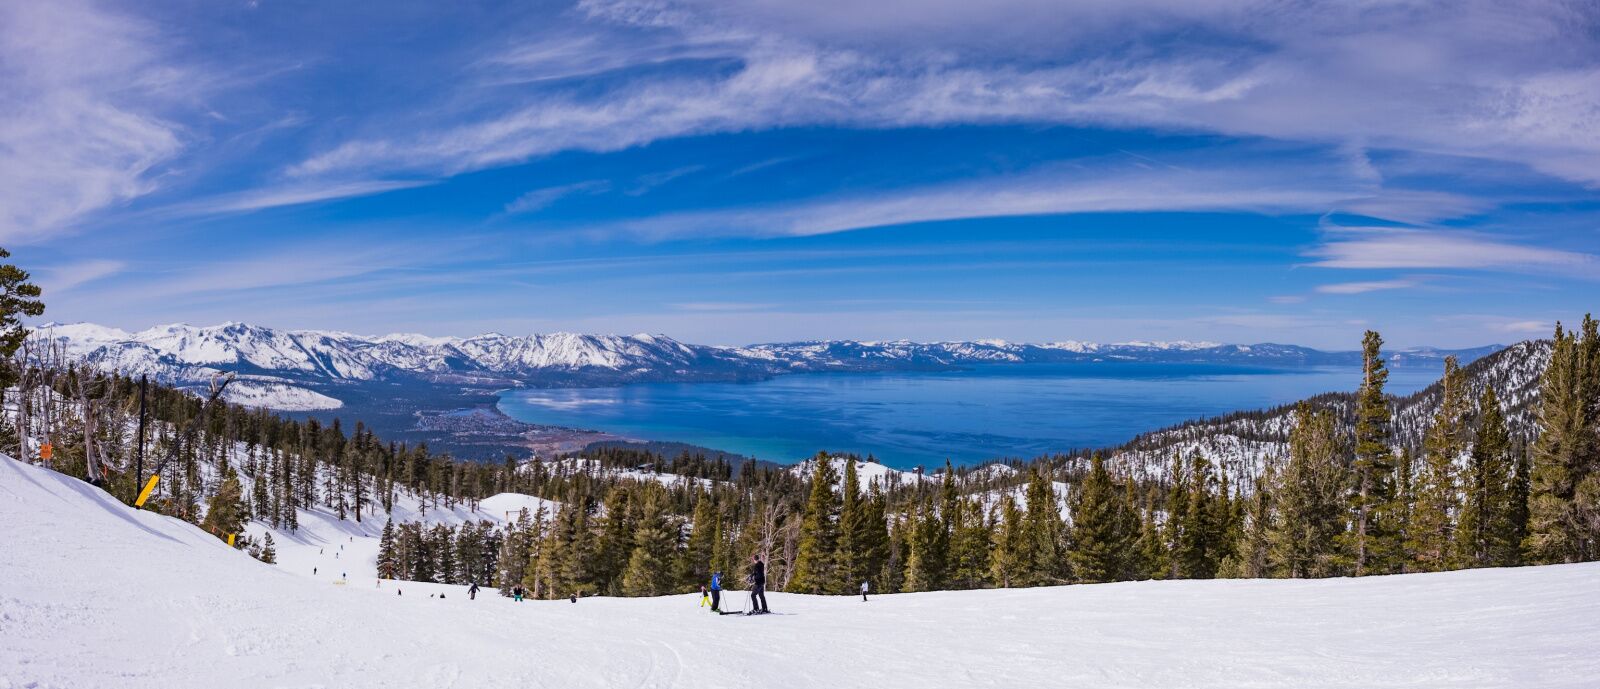 Heavenly Lake Tahoe ski resort - view of lake from trails 